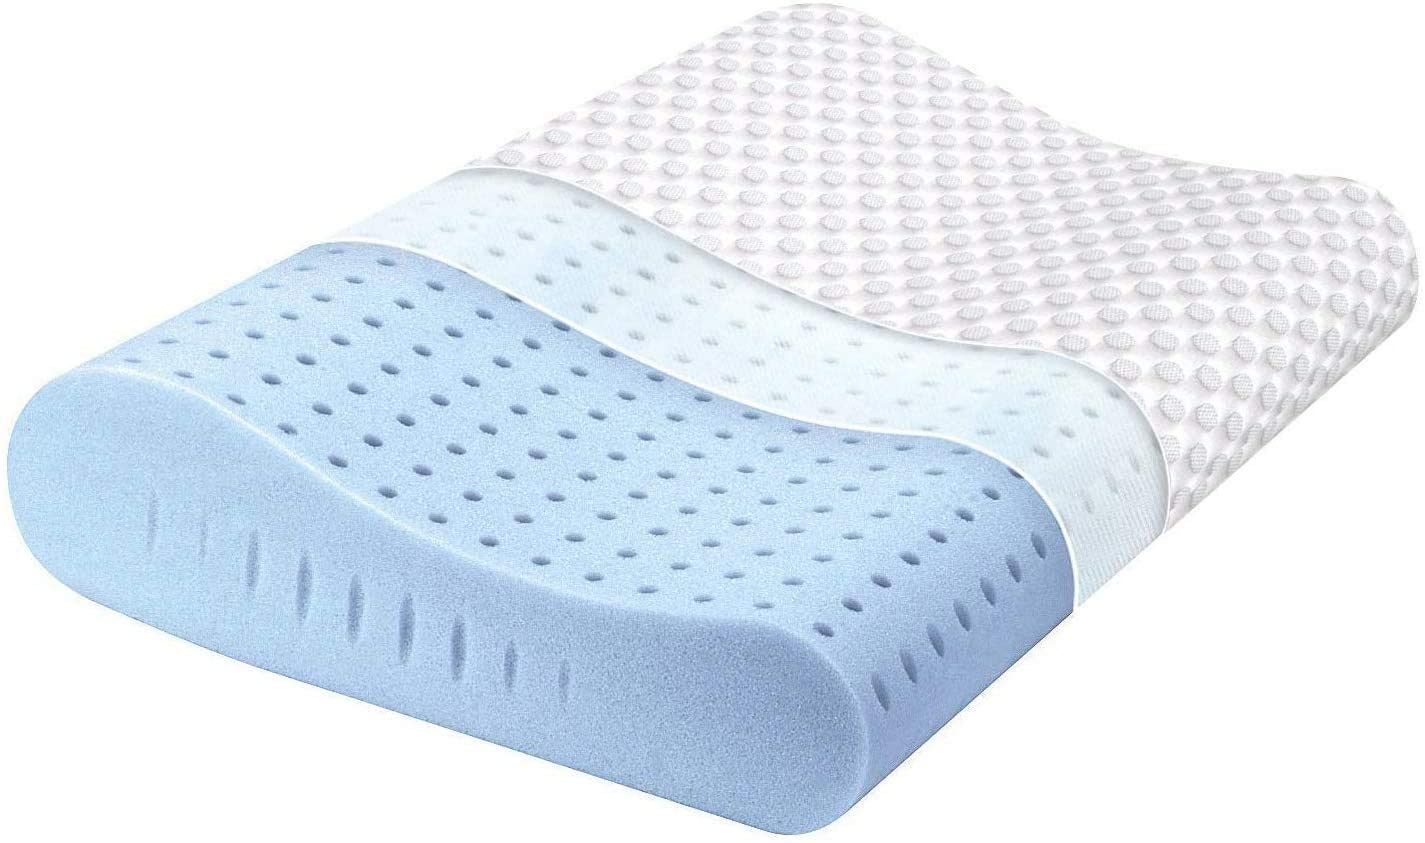 Best Cervical Pillows For Seniors | Milemont Cervical Pillow for Neck Pain